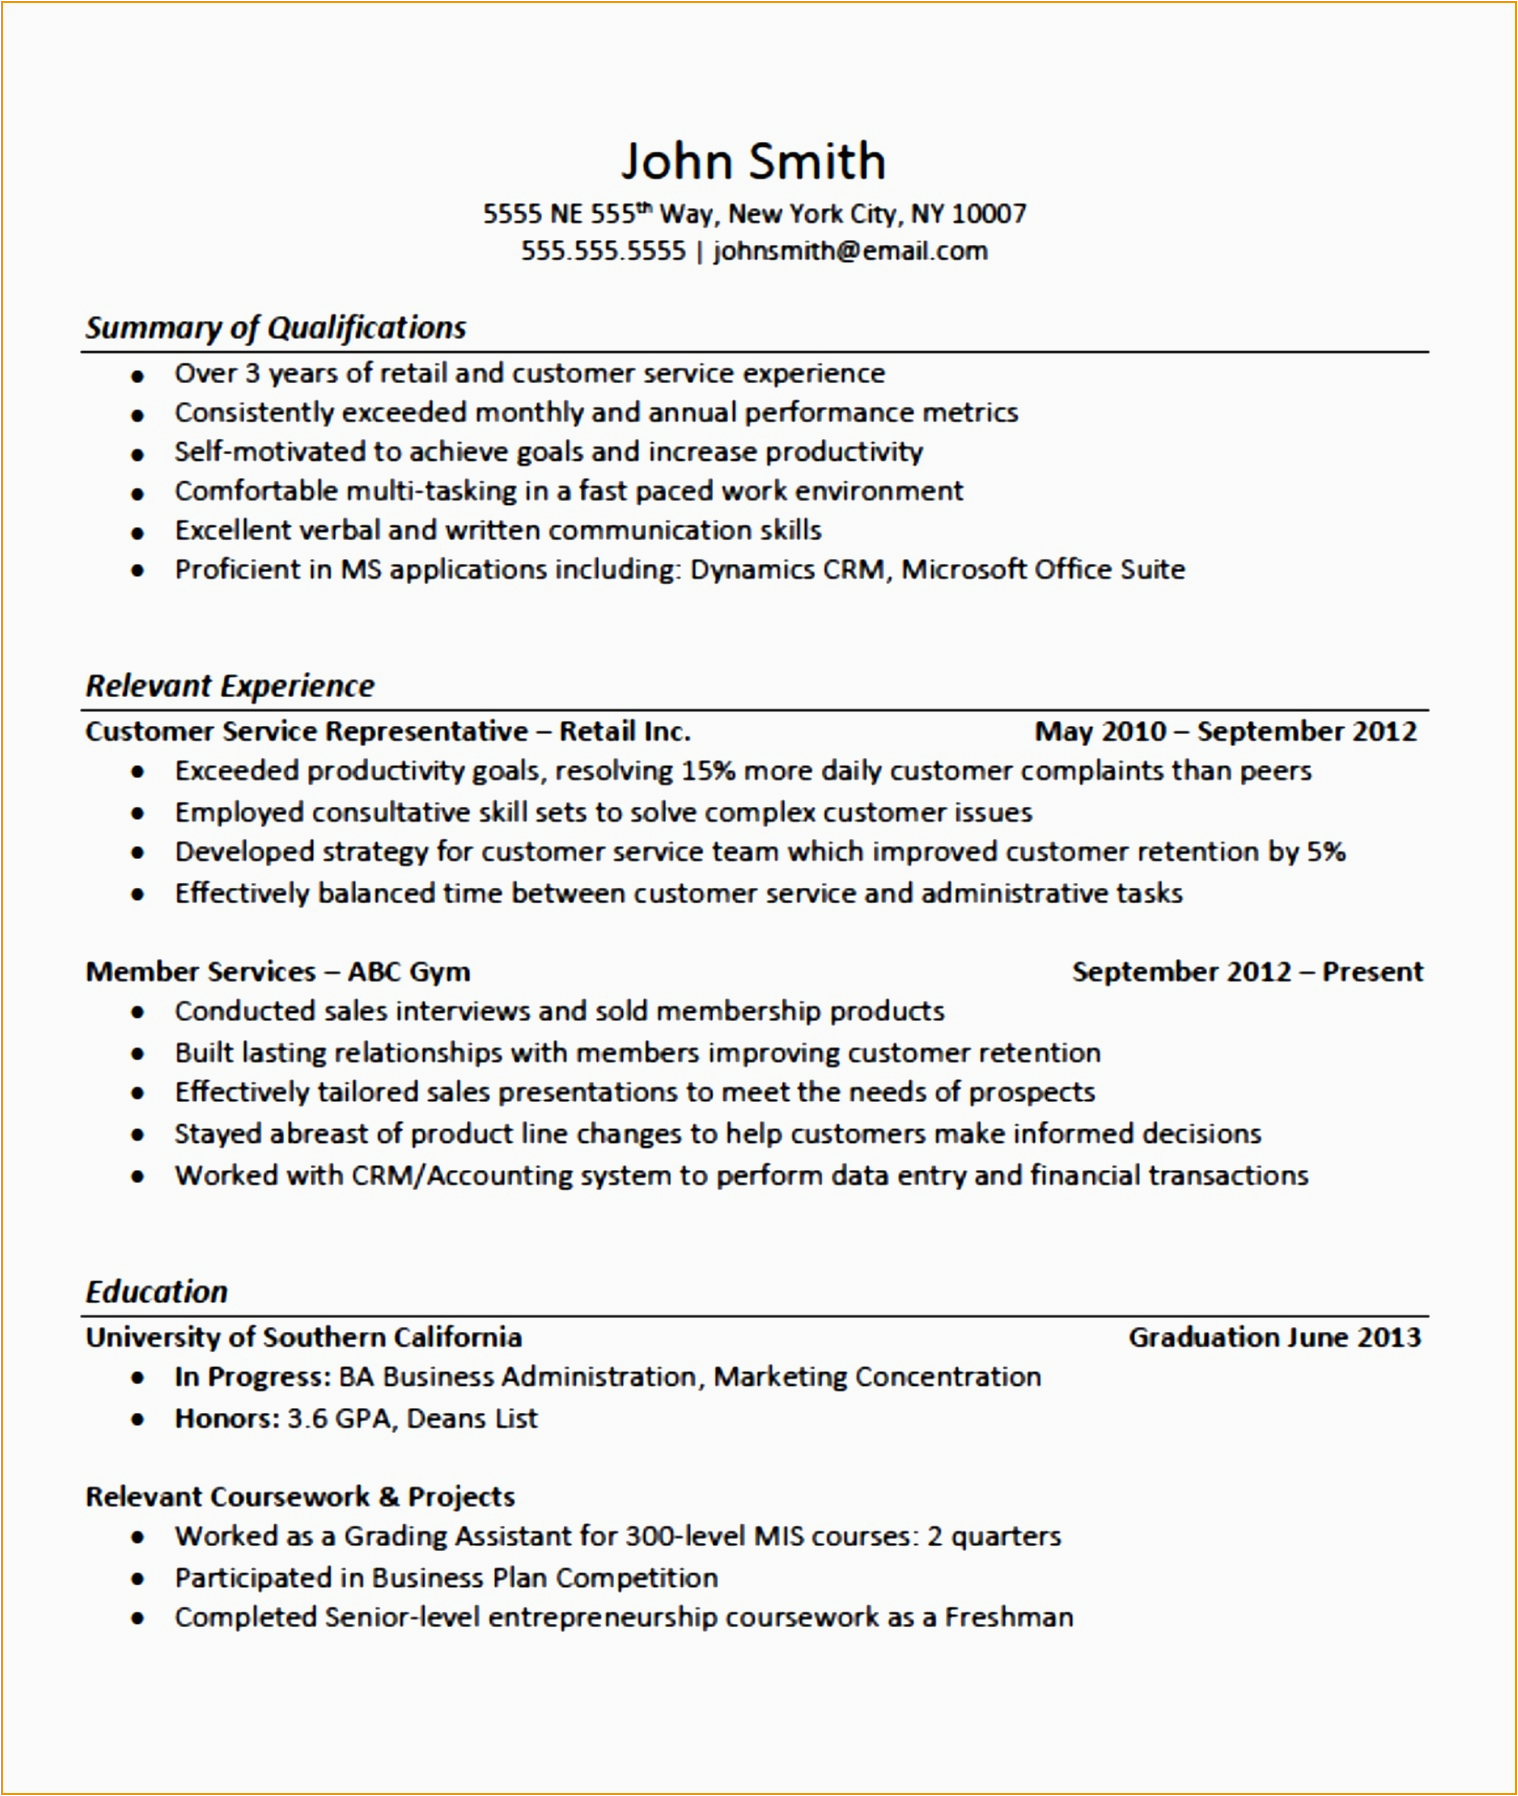 resume builder no work experience j